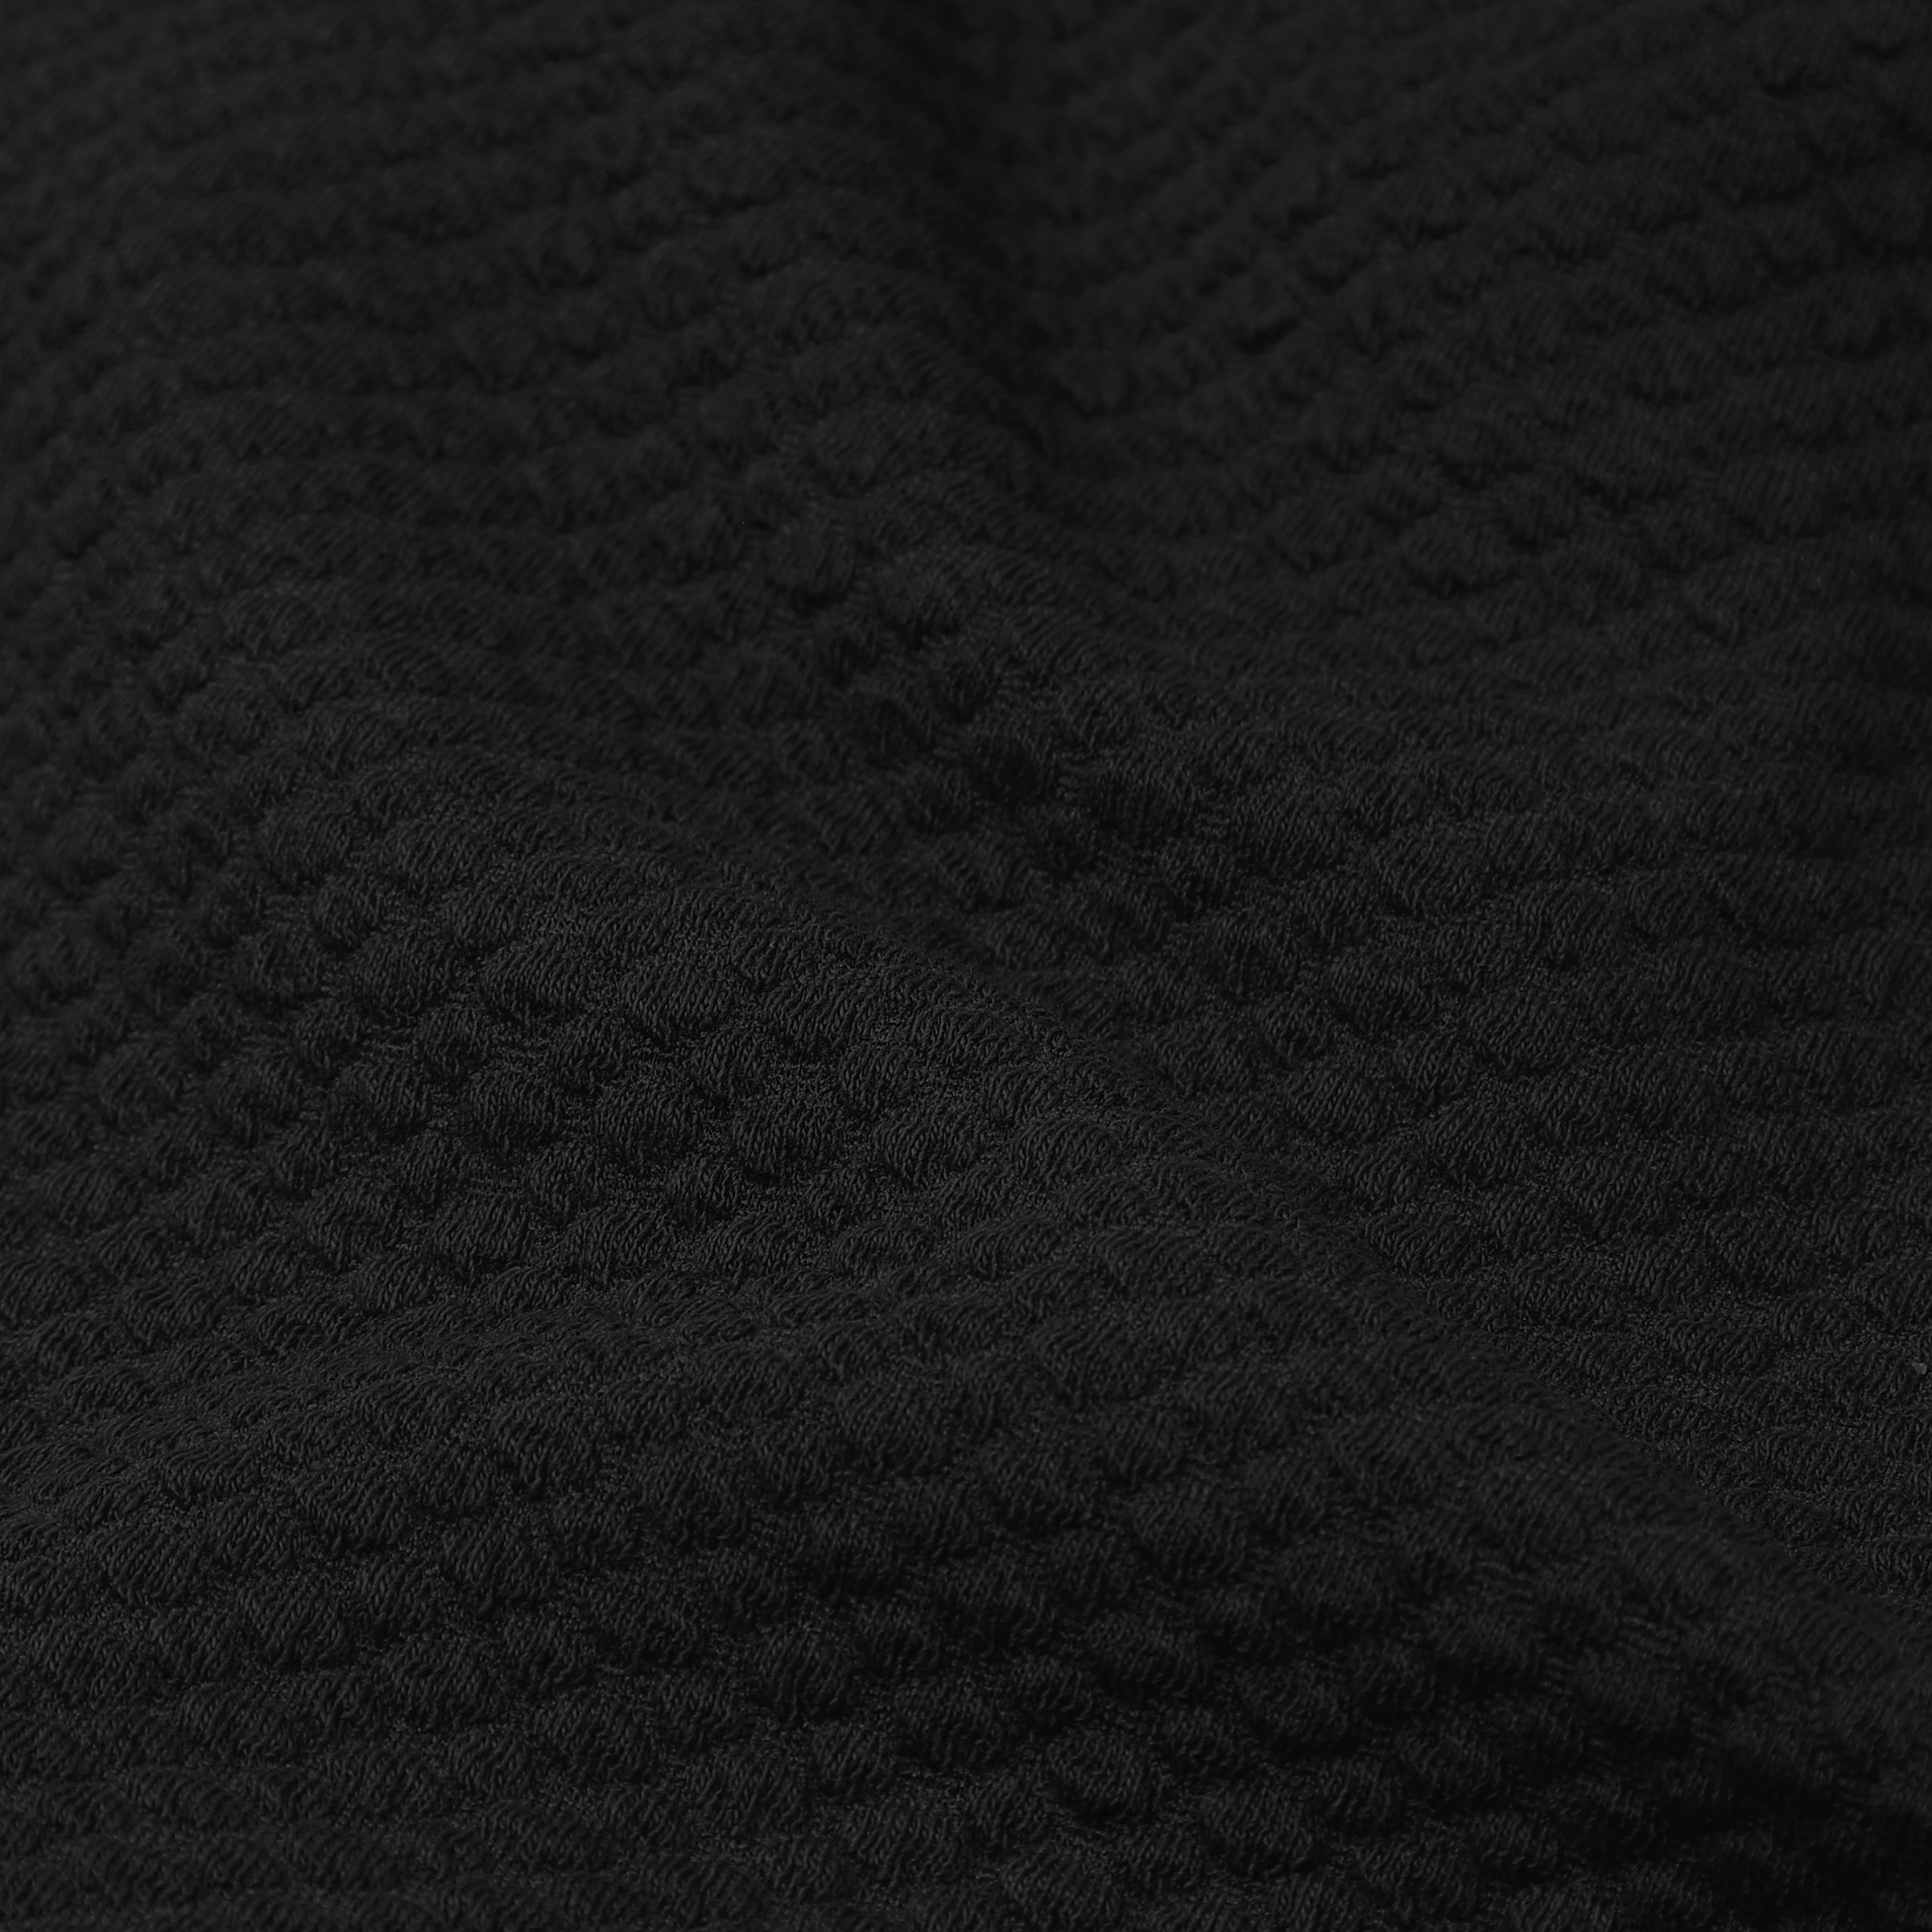 Roam Hoodie Black close up of fabric